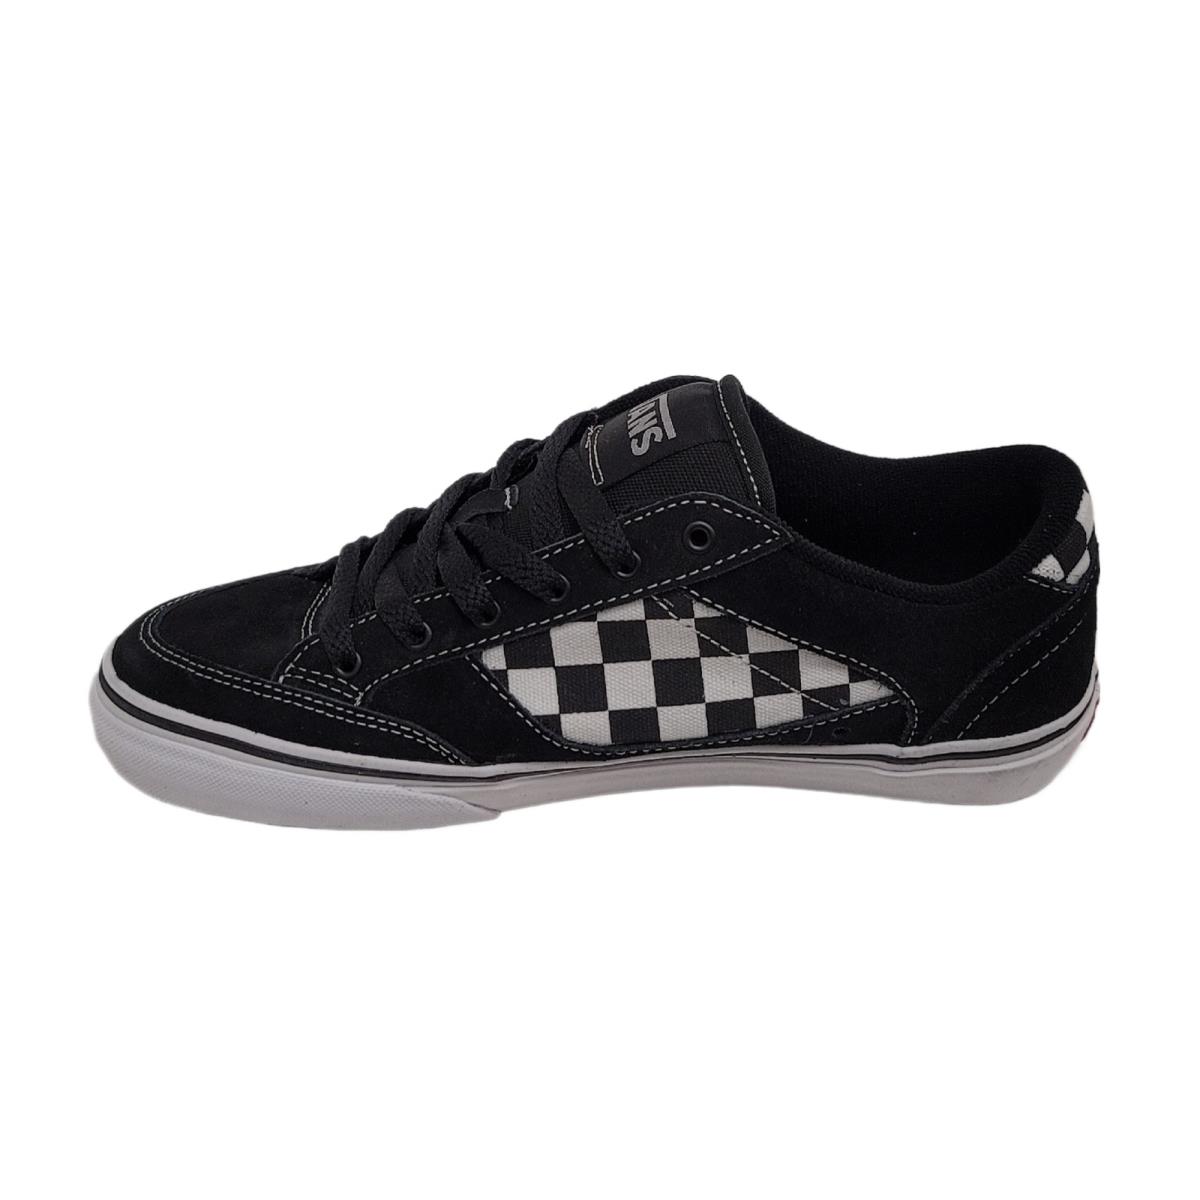 Vans Junior / Grade School Brasco Shoe Black / White Checkerboard VN-0DDX56M